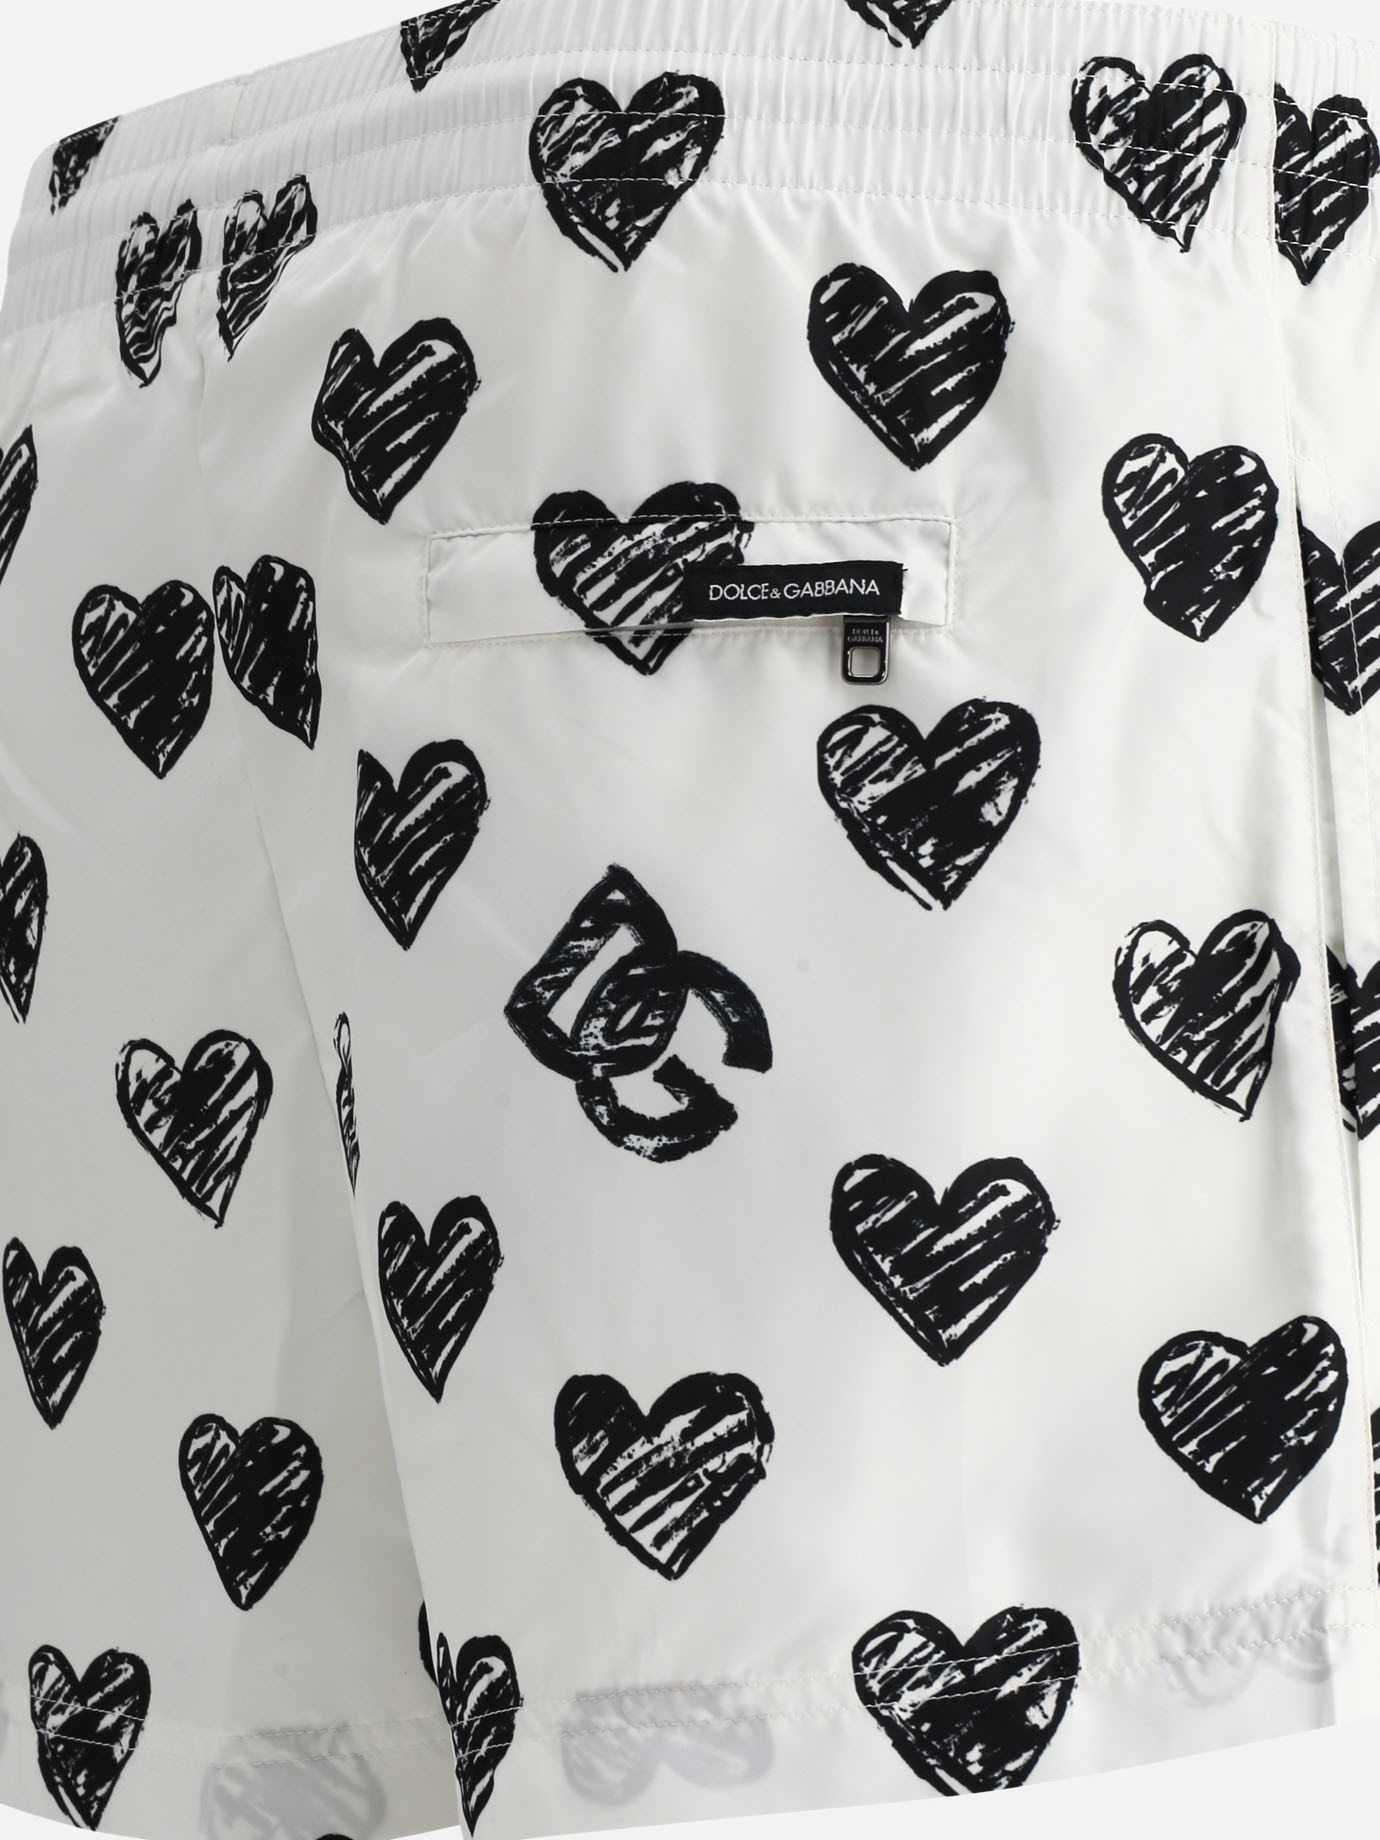 Costume  Hearts  by Dolce & Gabbana